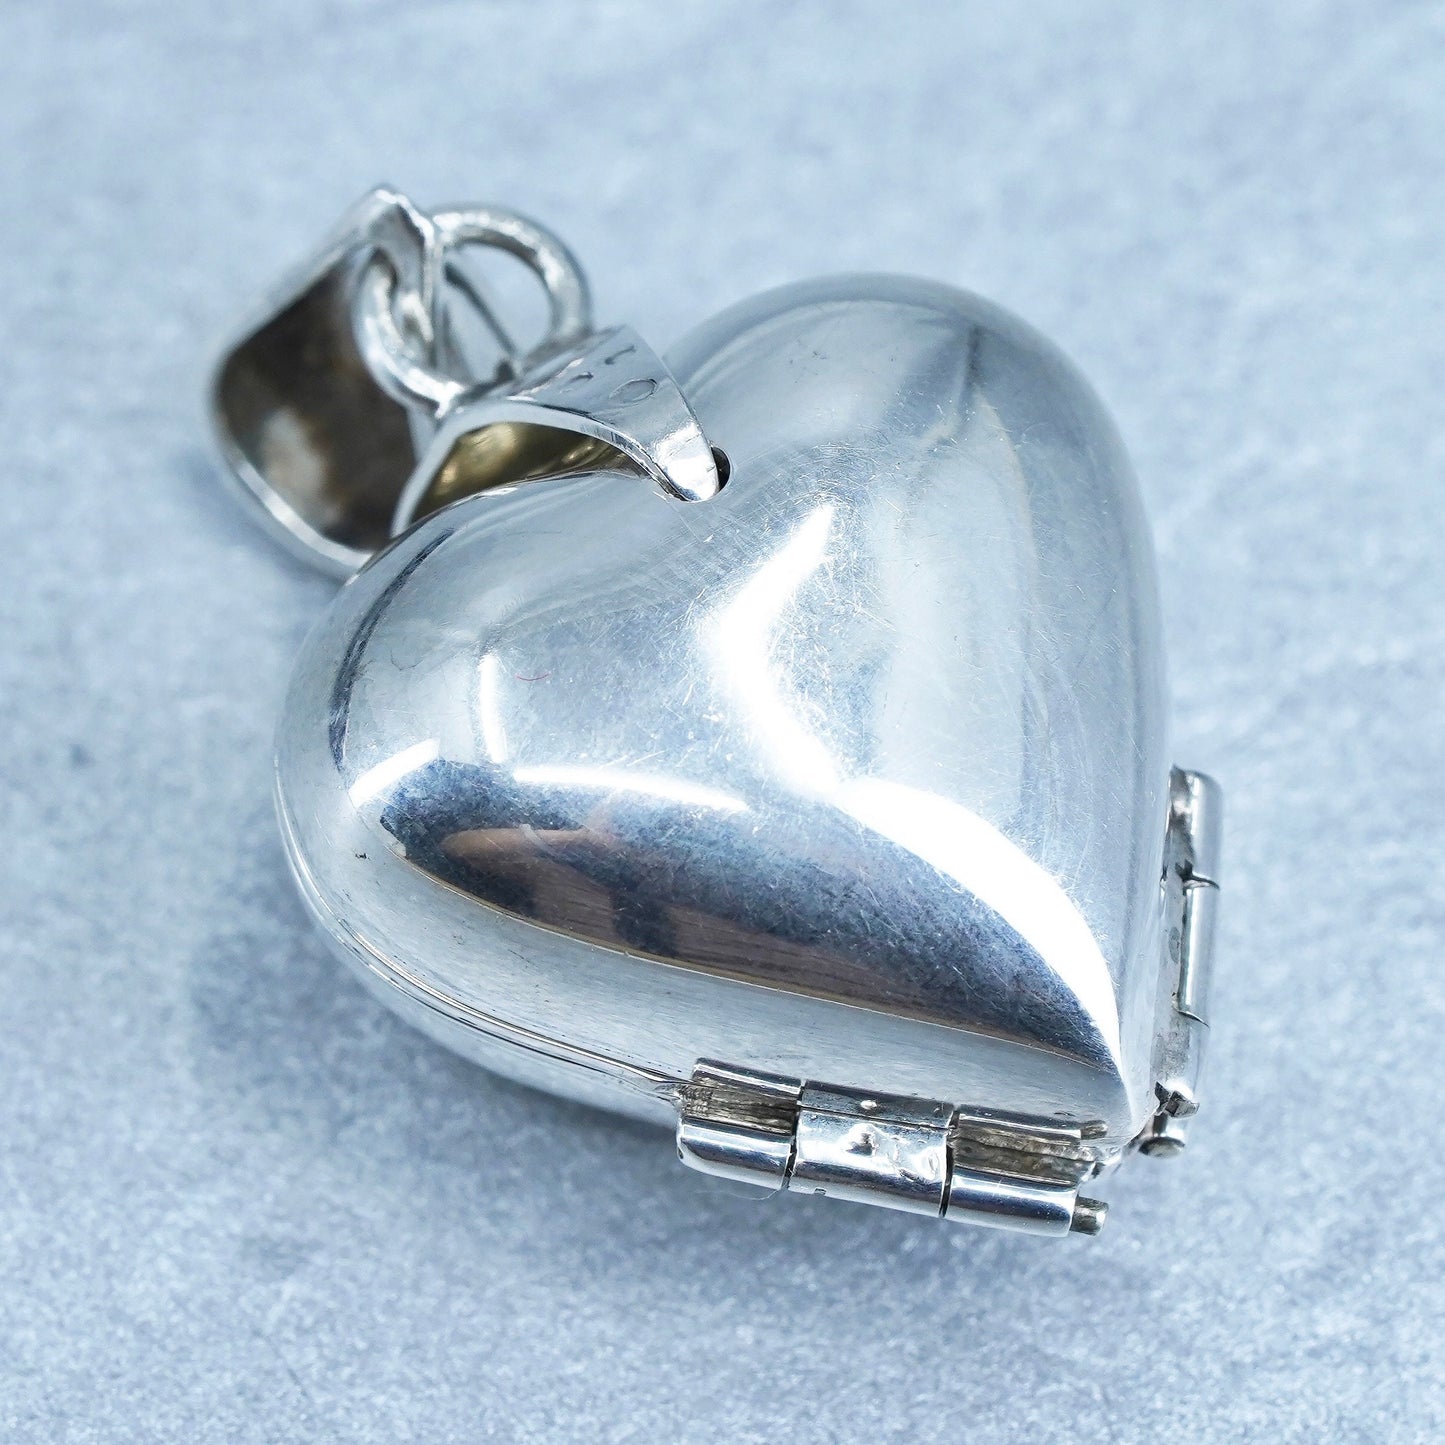 Antique Sterling silver handmade charm, 925 heart 4 photos locket